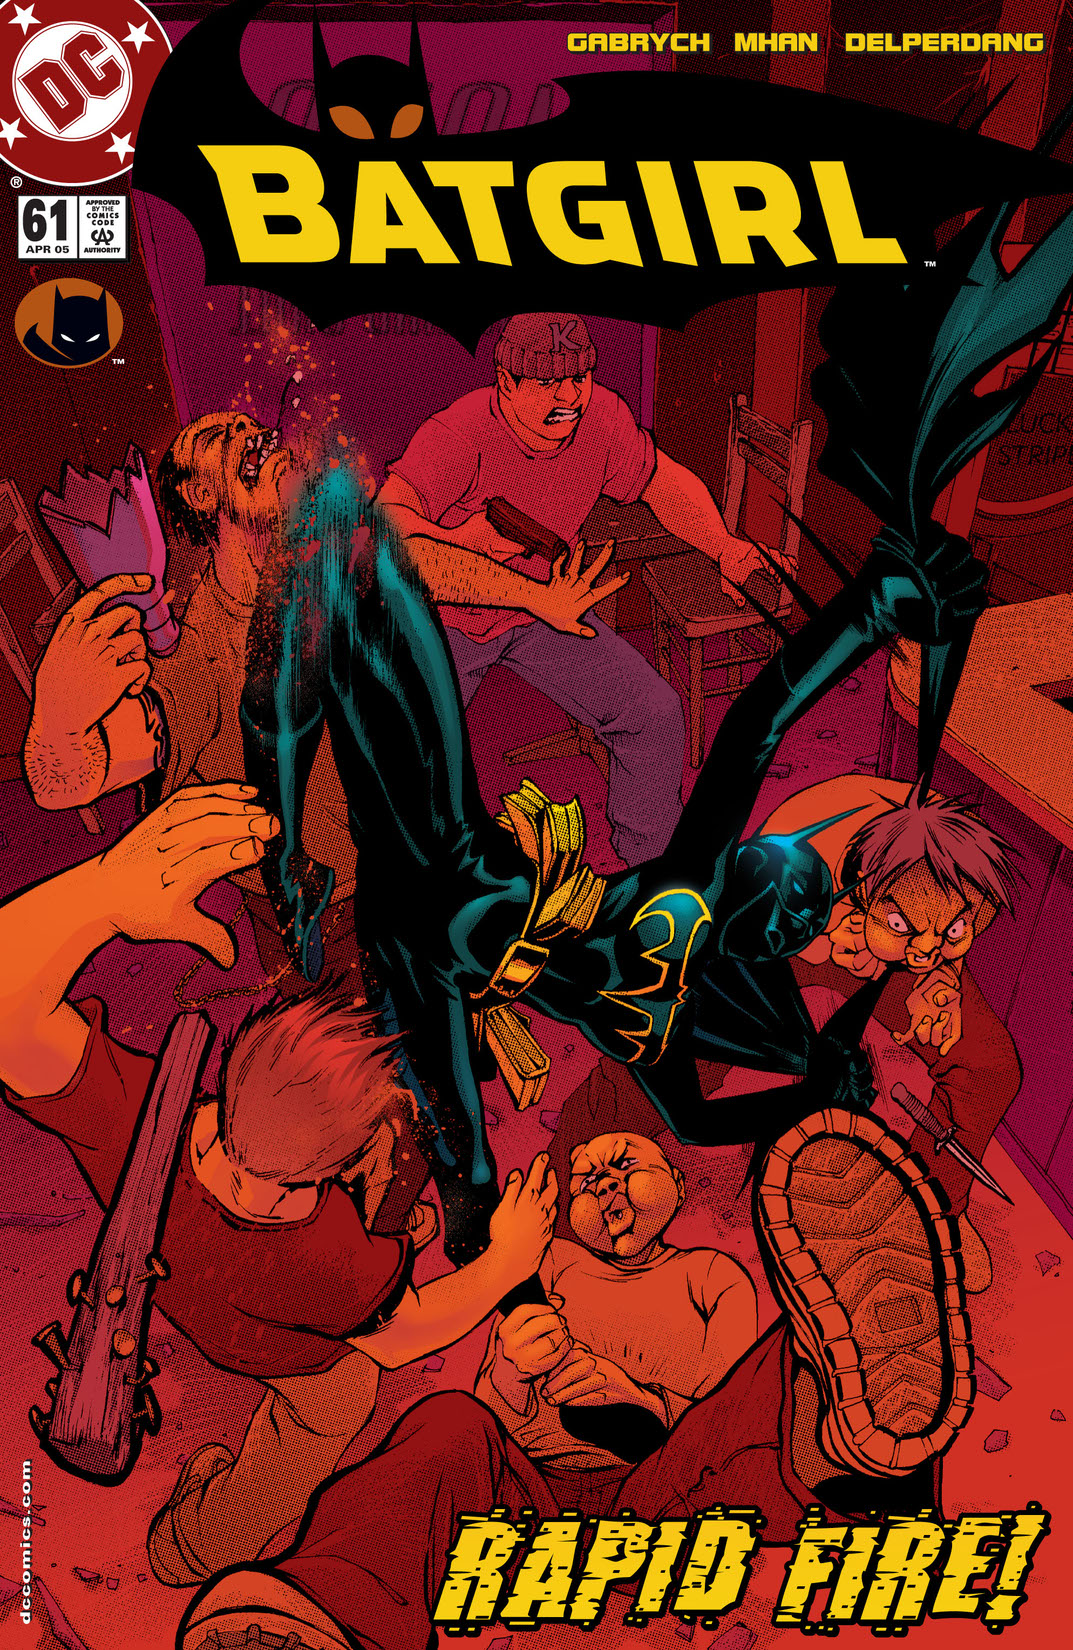 Batgirl (2000-) #61 preview images